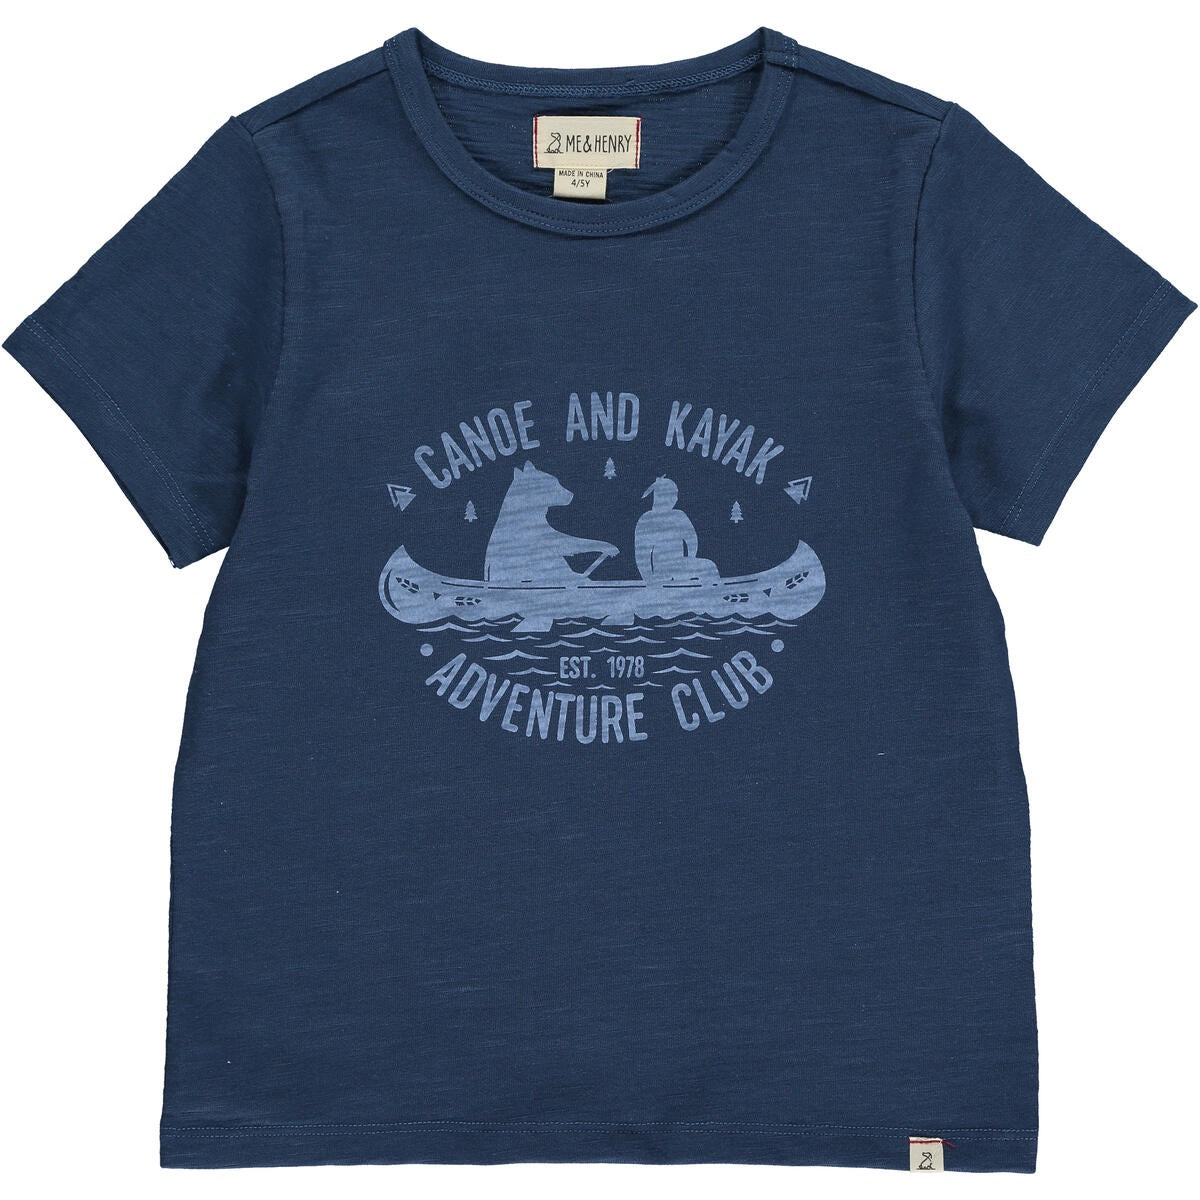 Me & Henry Falmouth Navy Adventure Camp T-Shirt HB1279b 5101